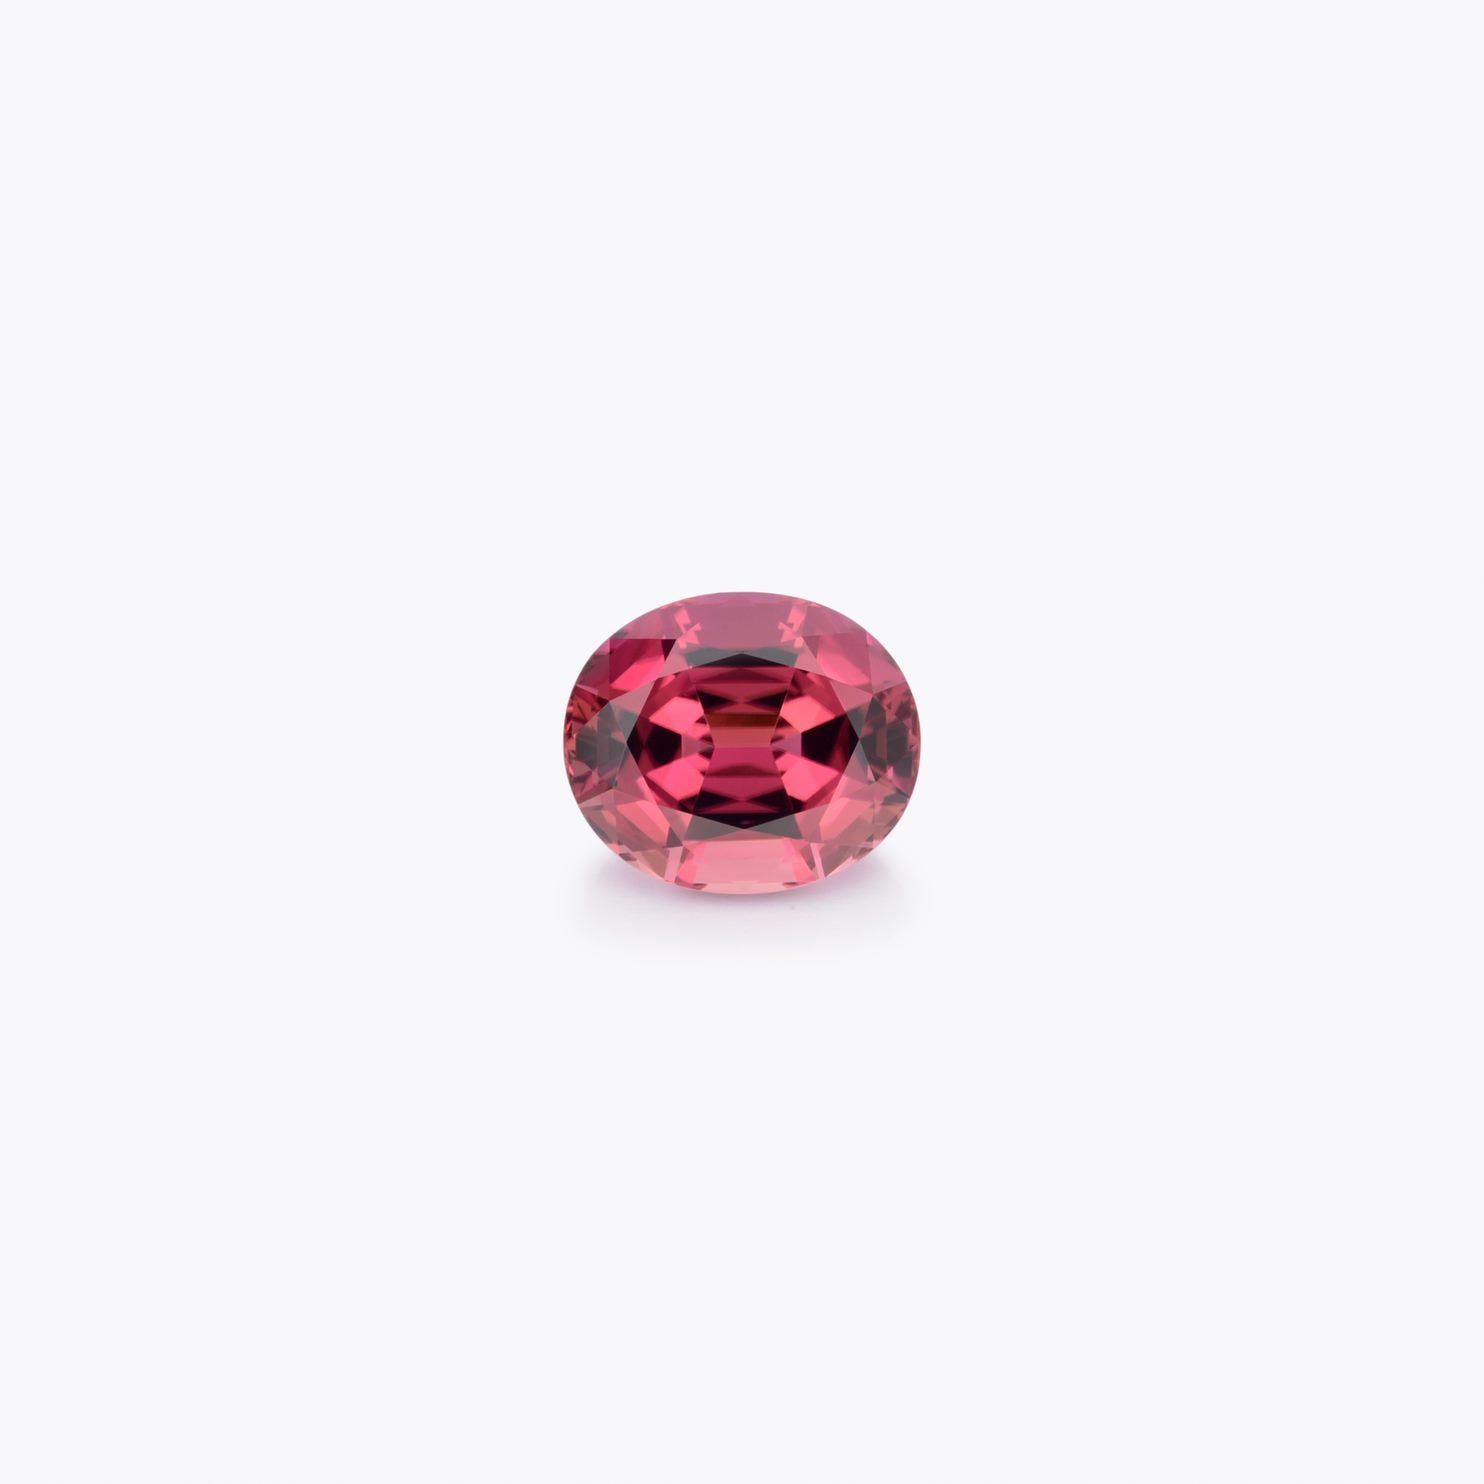 Contemporary Pink Tourmaline Ring Gem 10.43 Carat Unmounted Oval Loose Gemstone